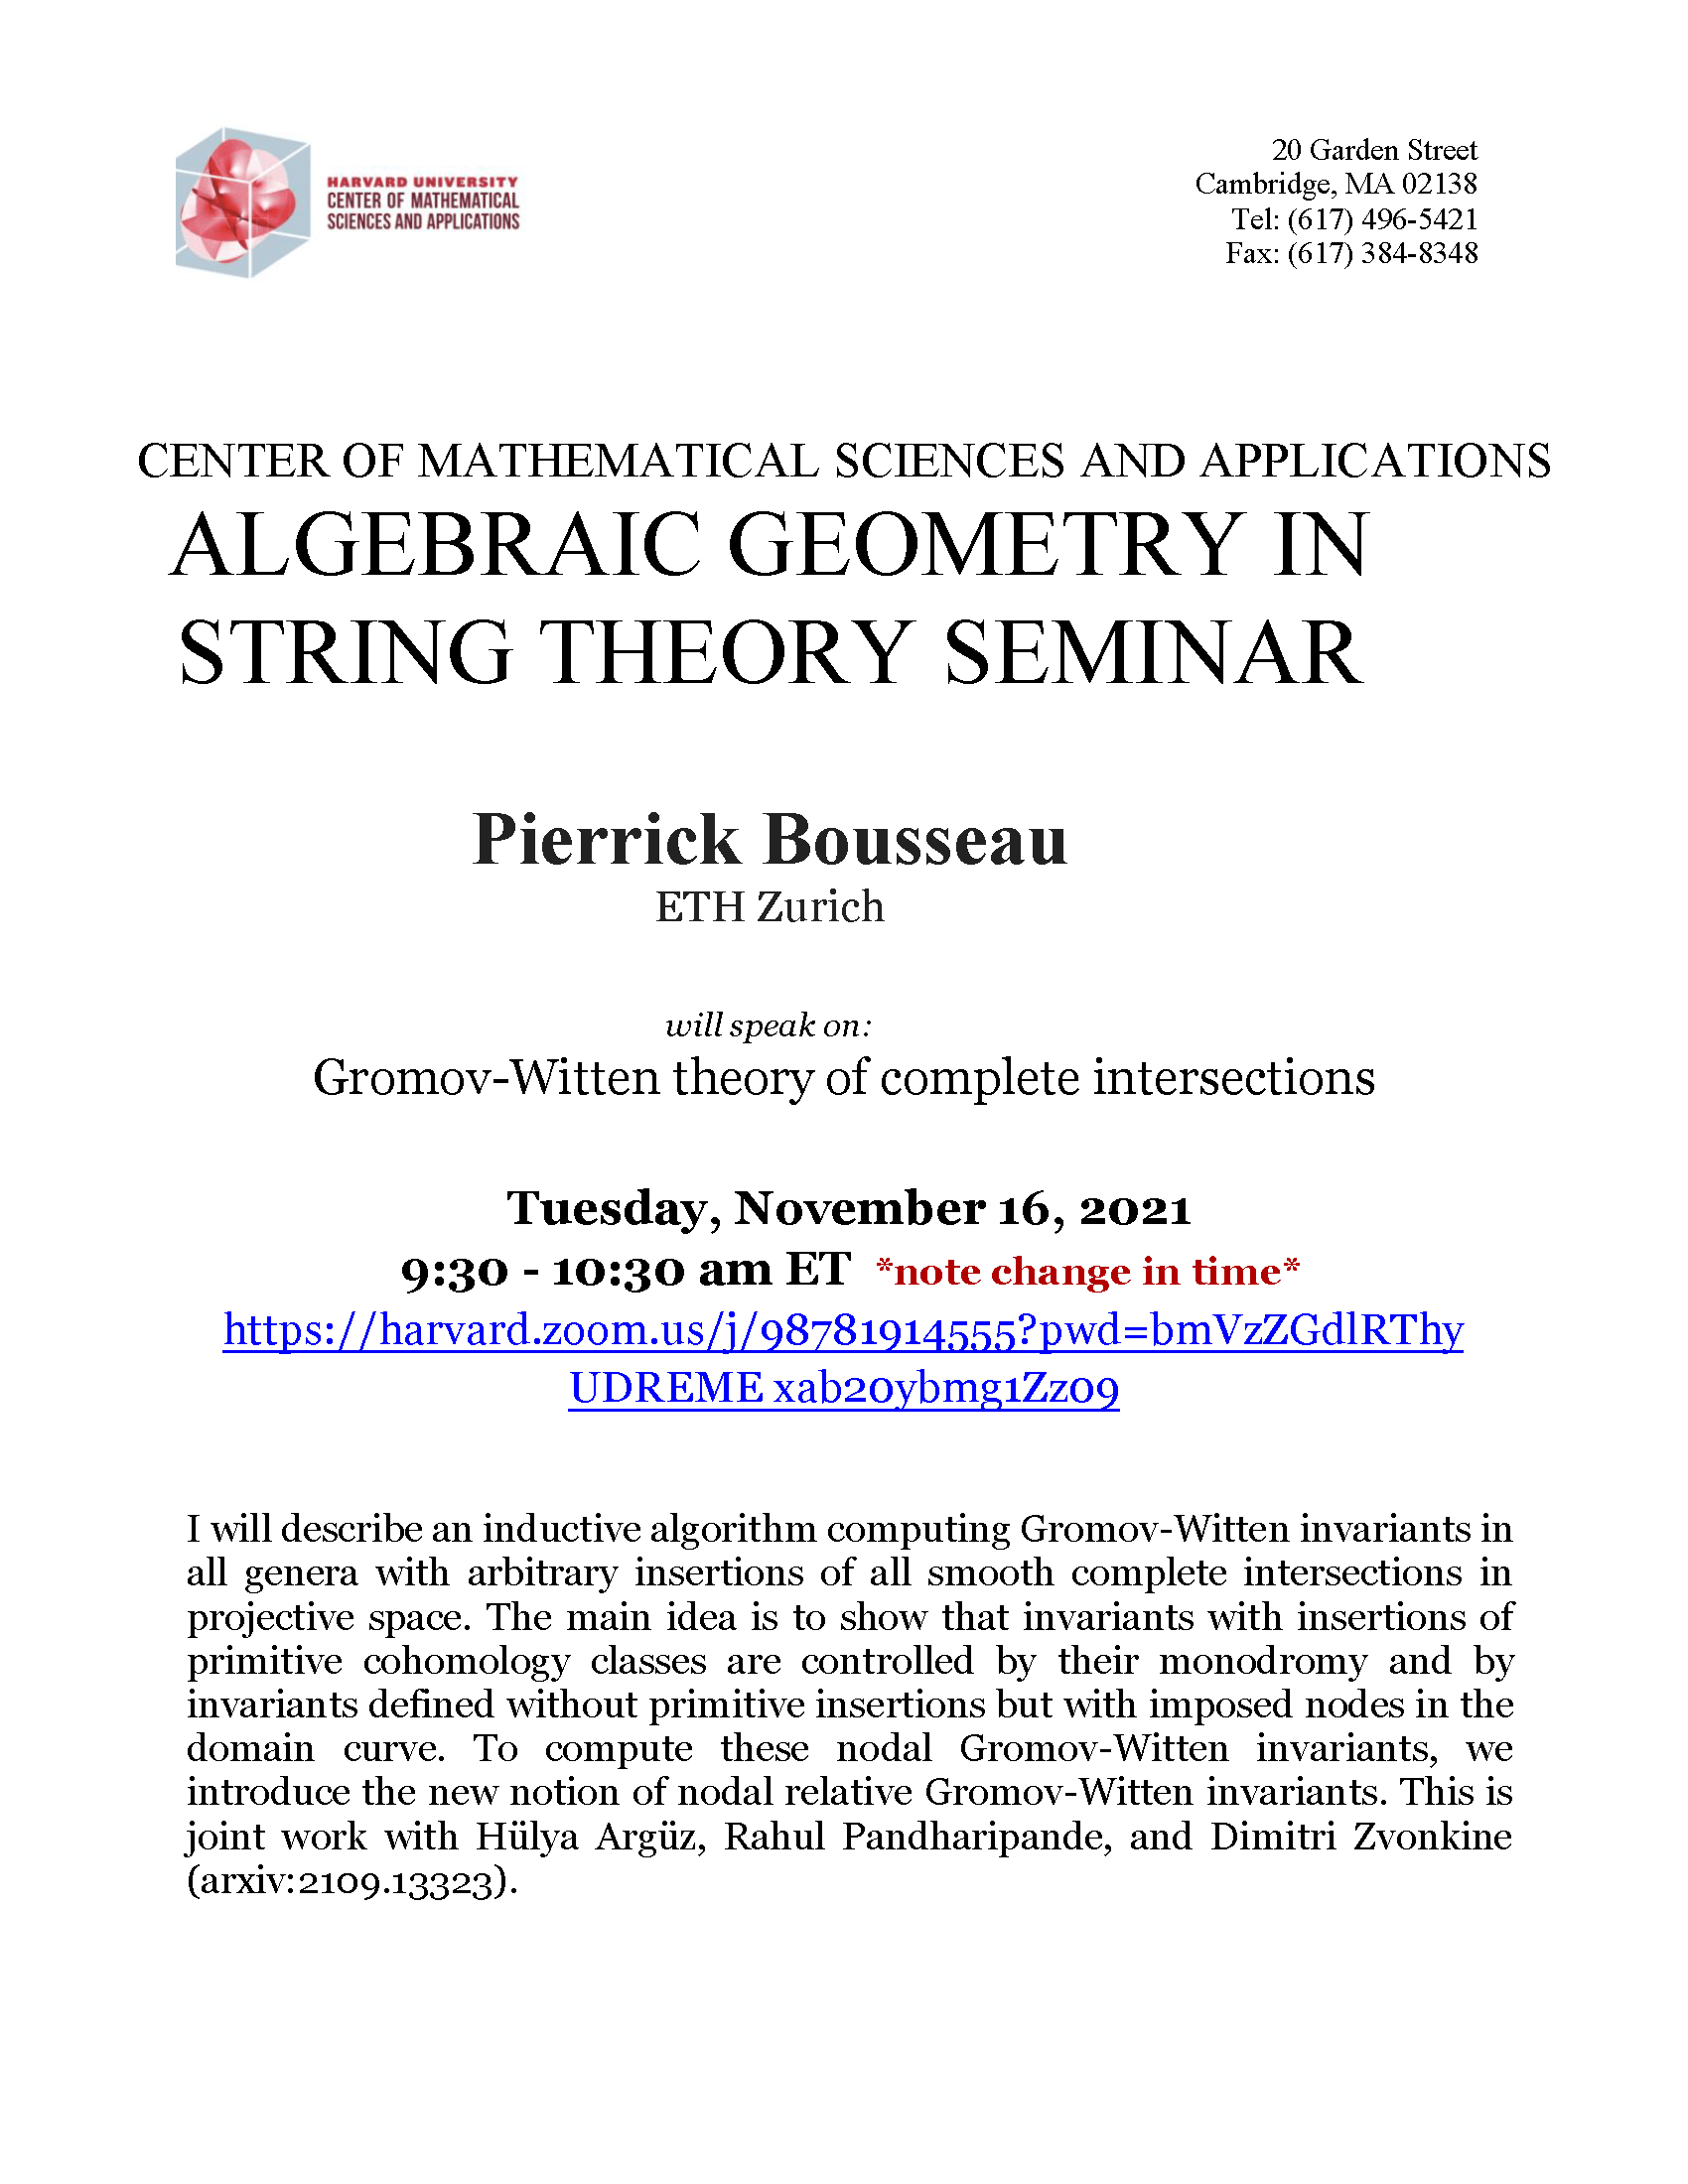 CMSA-Algebraic-Geometry-in-String-Theory-Seminar-11.16.21-1-1